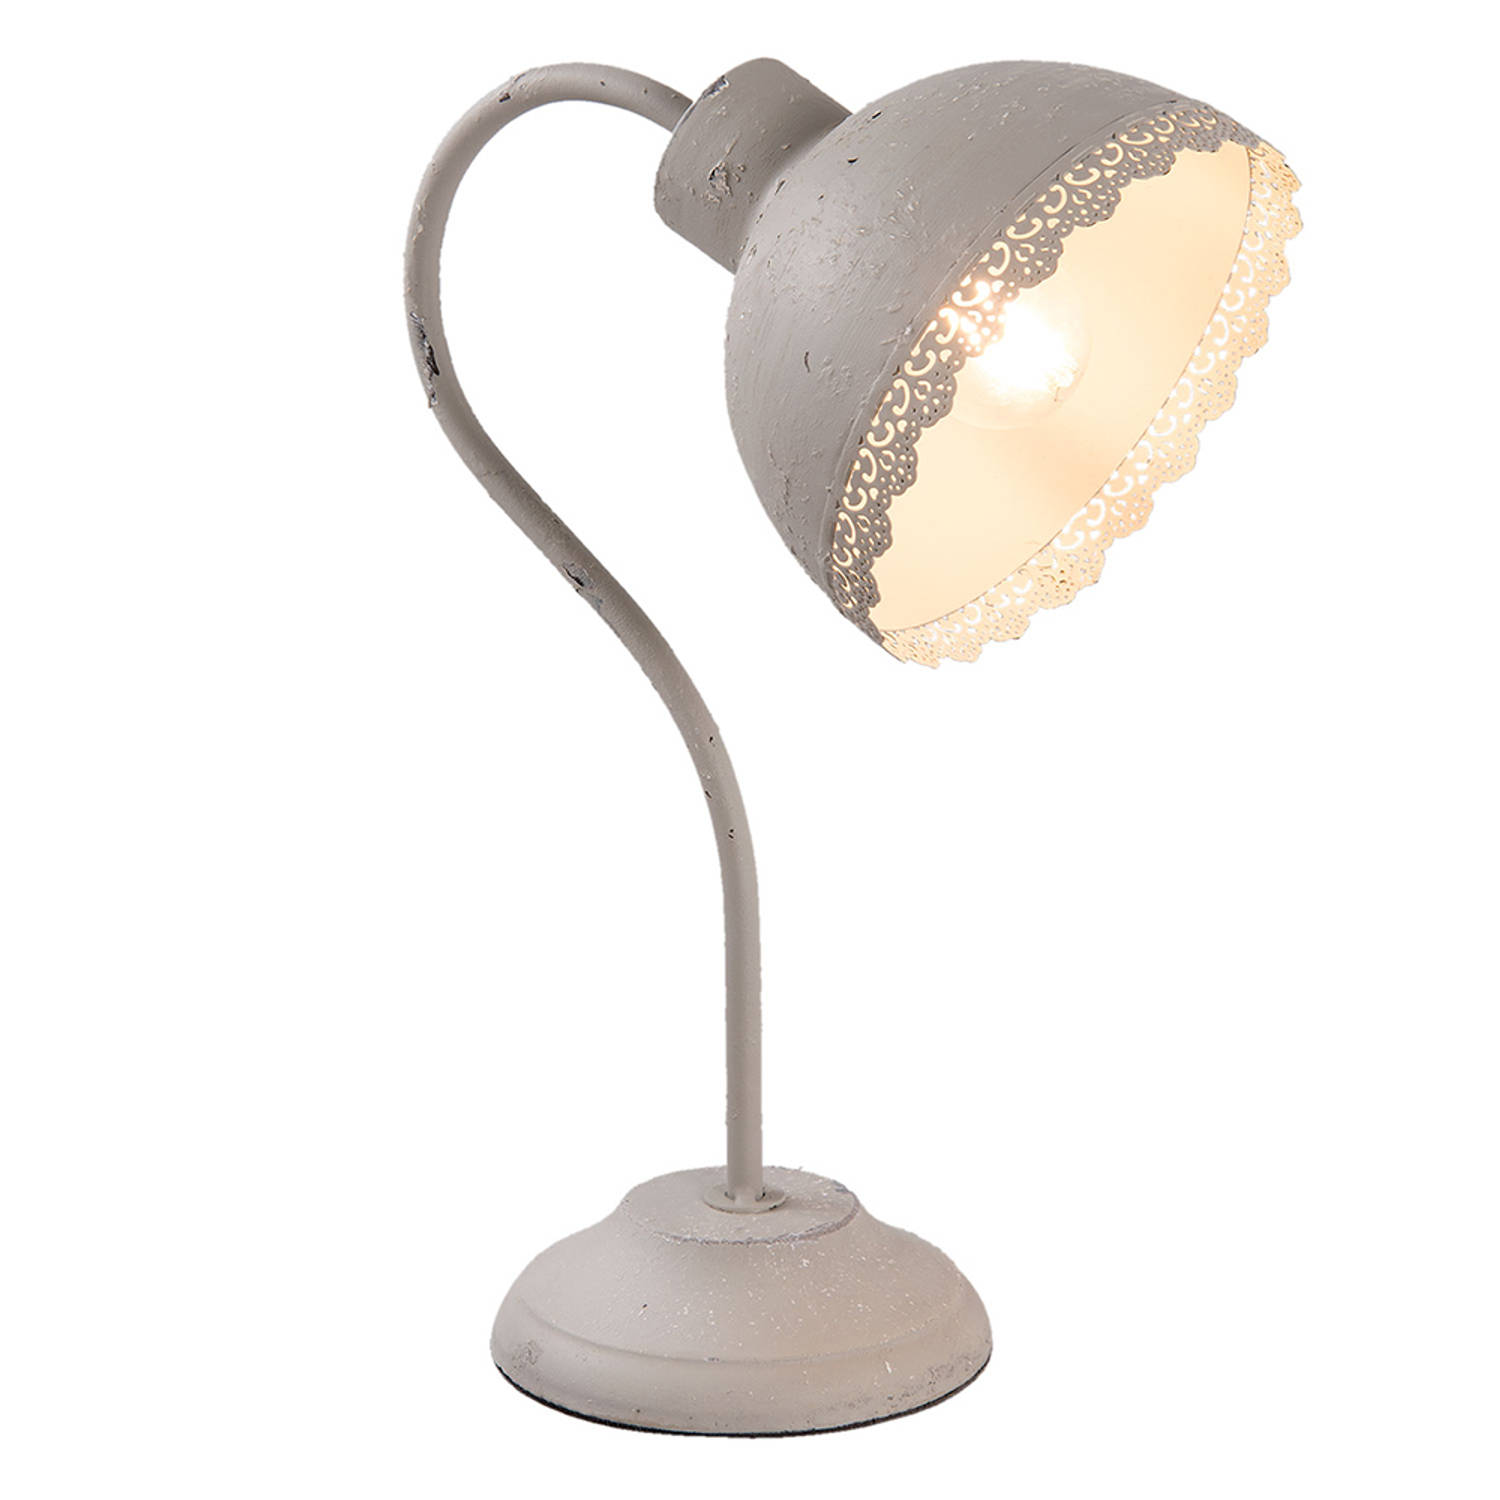 HAES DECO - Bureaulamp - Shabby Chic - Vintage / Retro Lamp, formaat 15x25x35 cm - Grijs Metaal - Tafellamp, Sfeerlamp